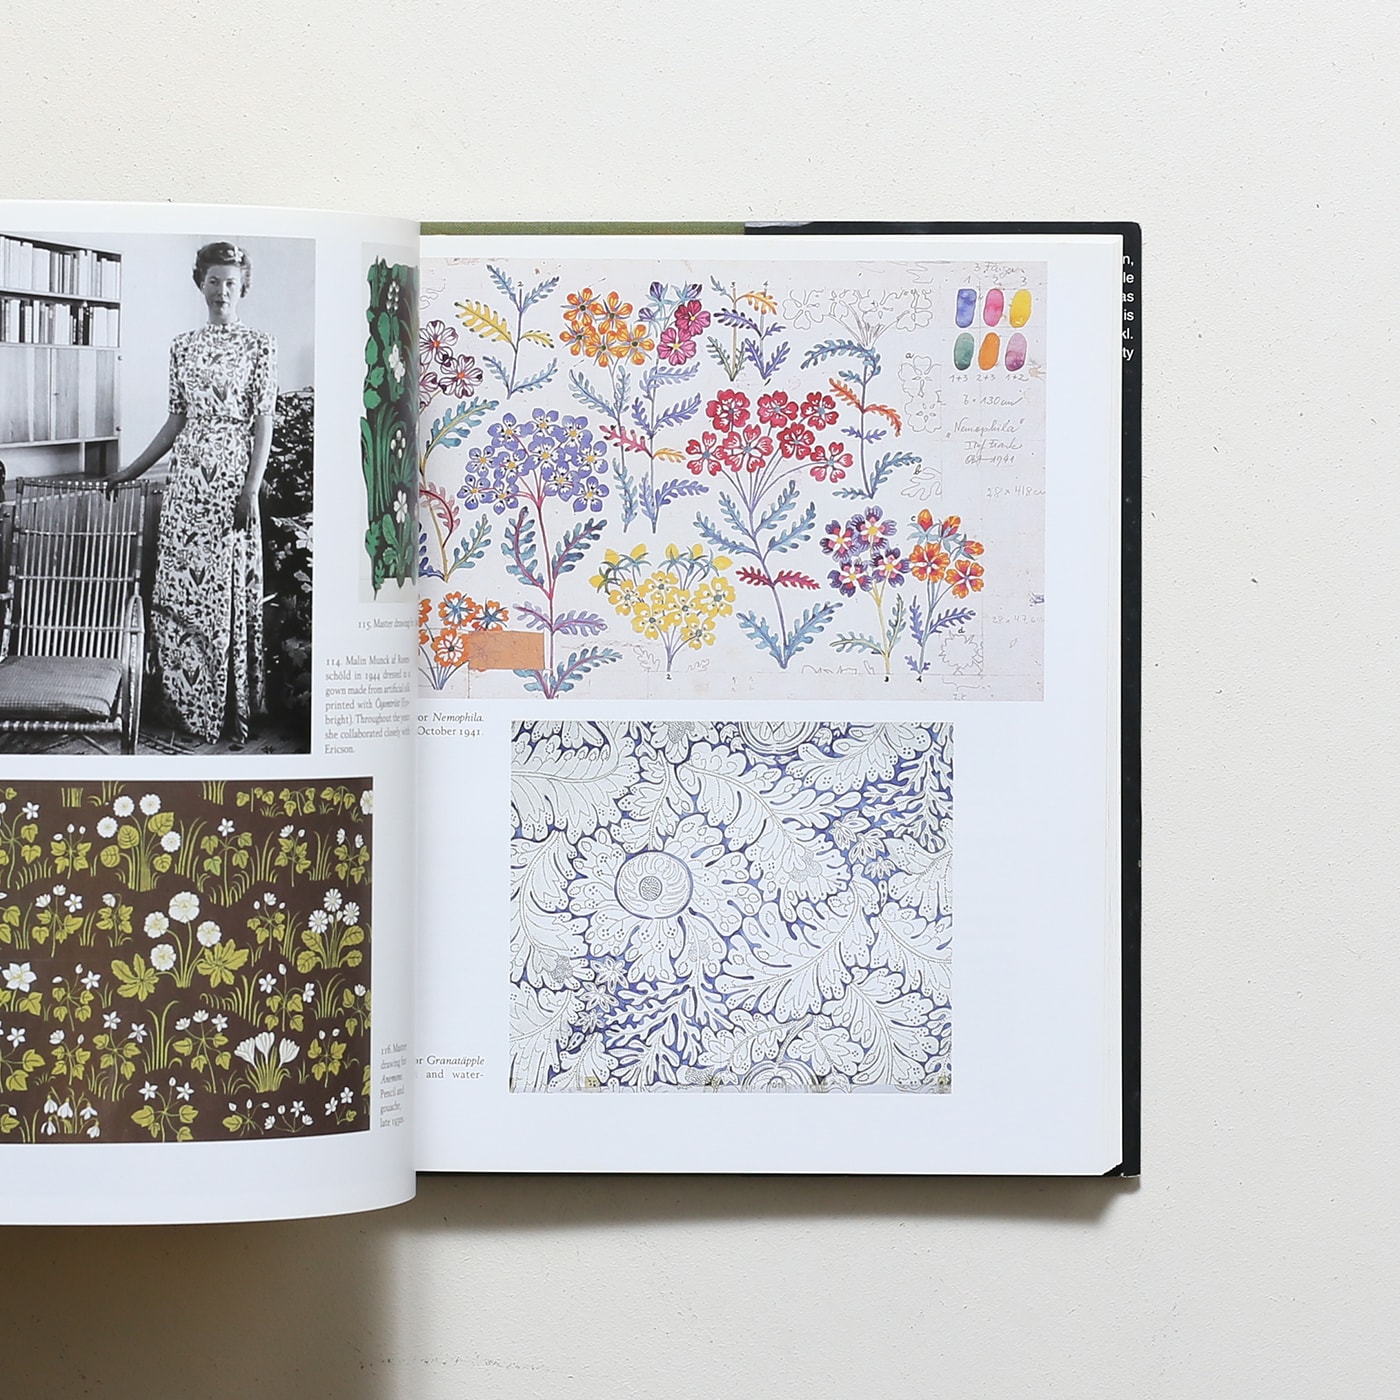 Josef Frank: Textile Designs